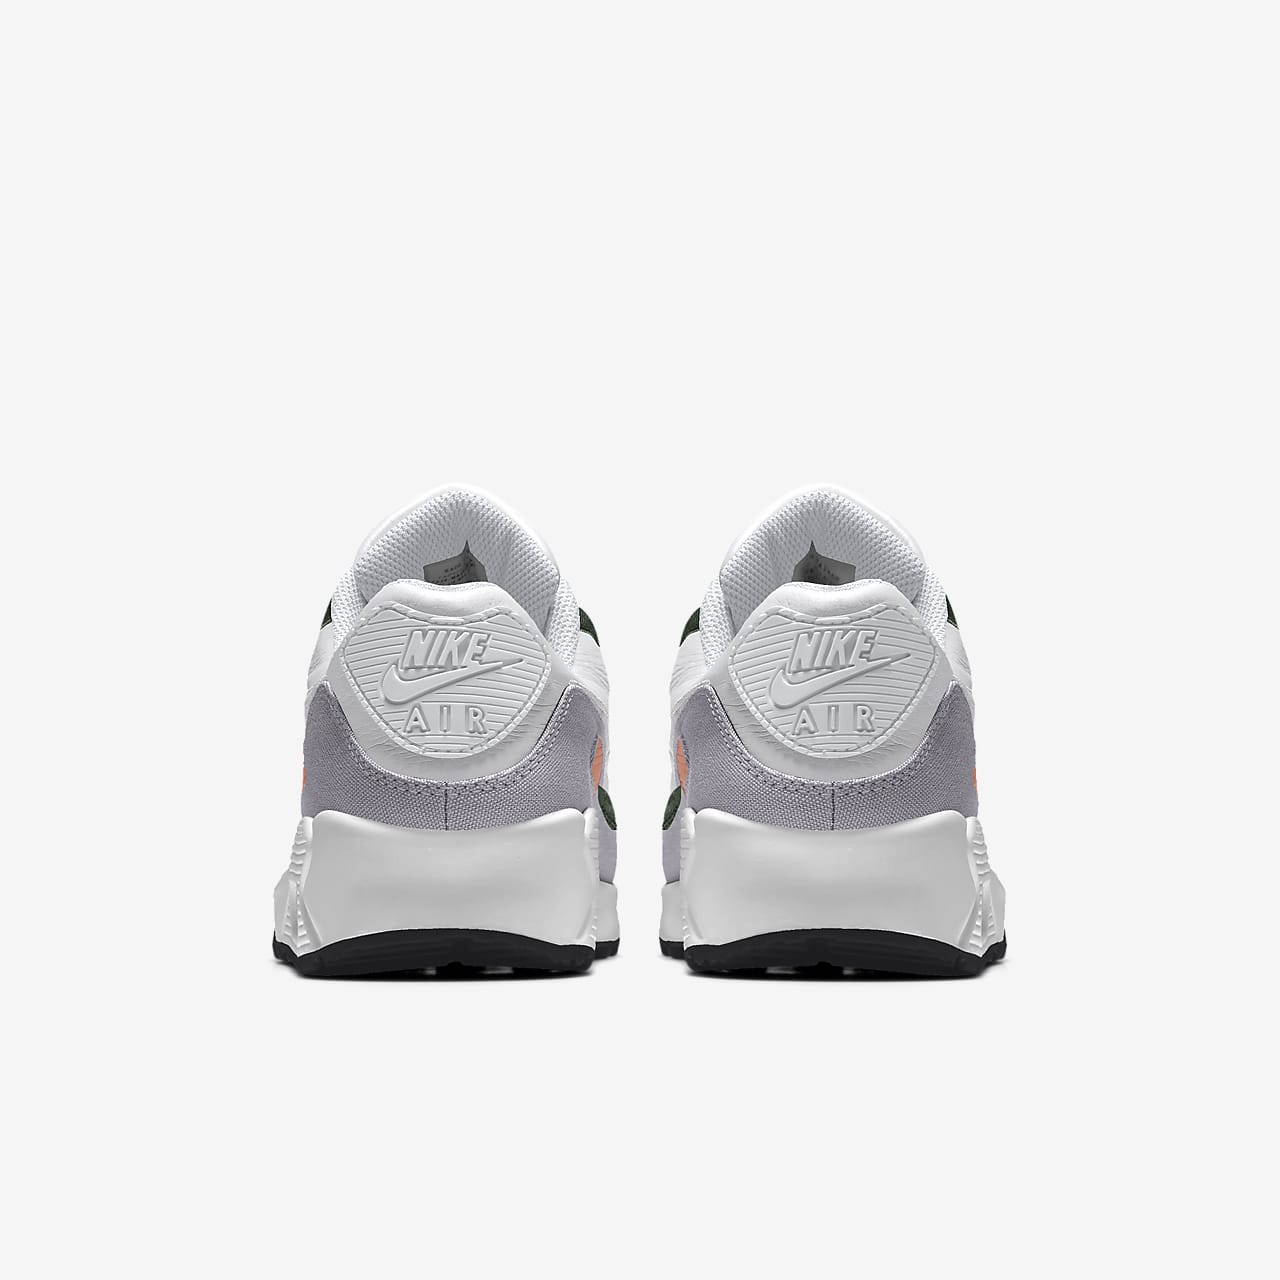 Verwant laten we het doen De volgende Nike Air Max 90 By You Custom Men's Shoes. Nike.com